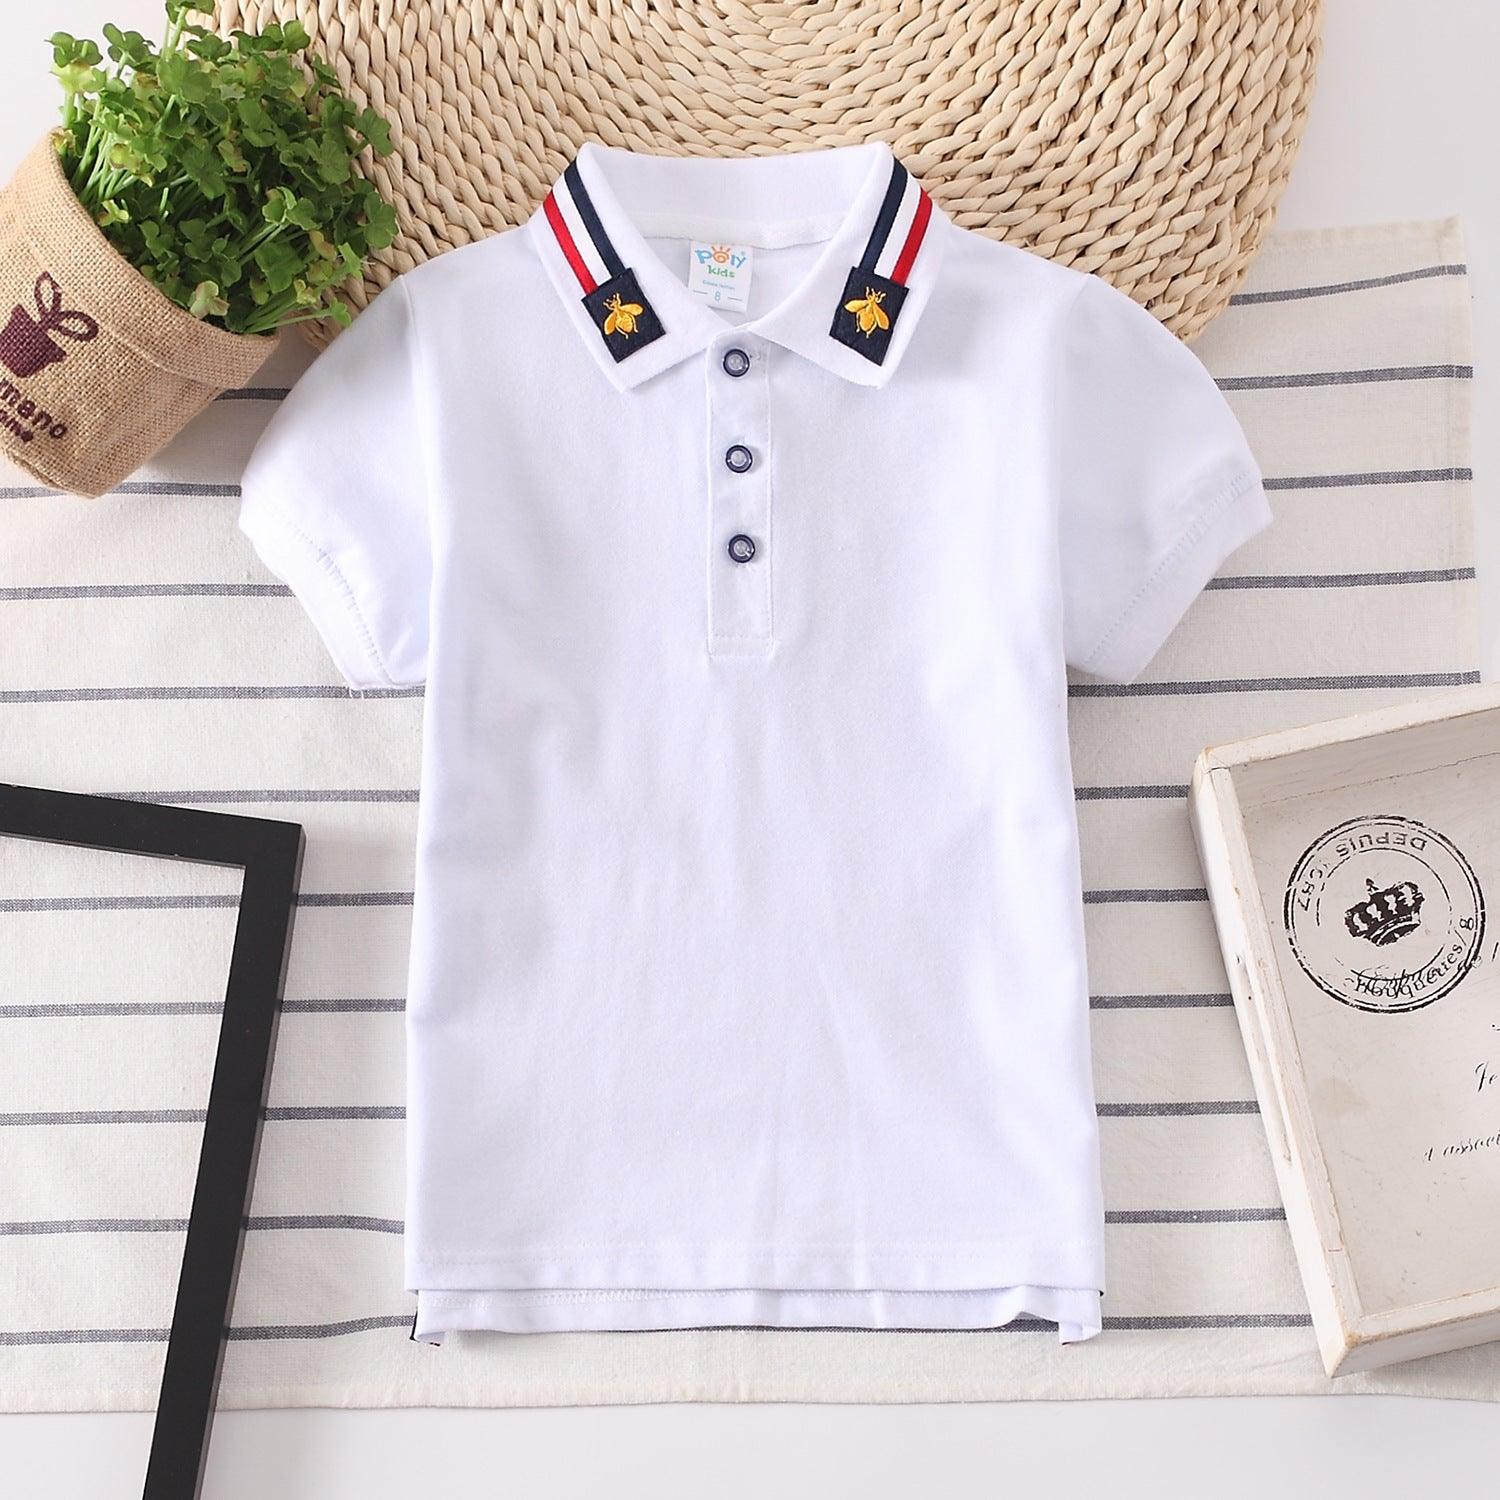 Child's Cool Cotton T-Shirt: Stylish Shirt for Boys - K3N Children's Clothing - K3N VENTURES